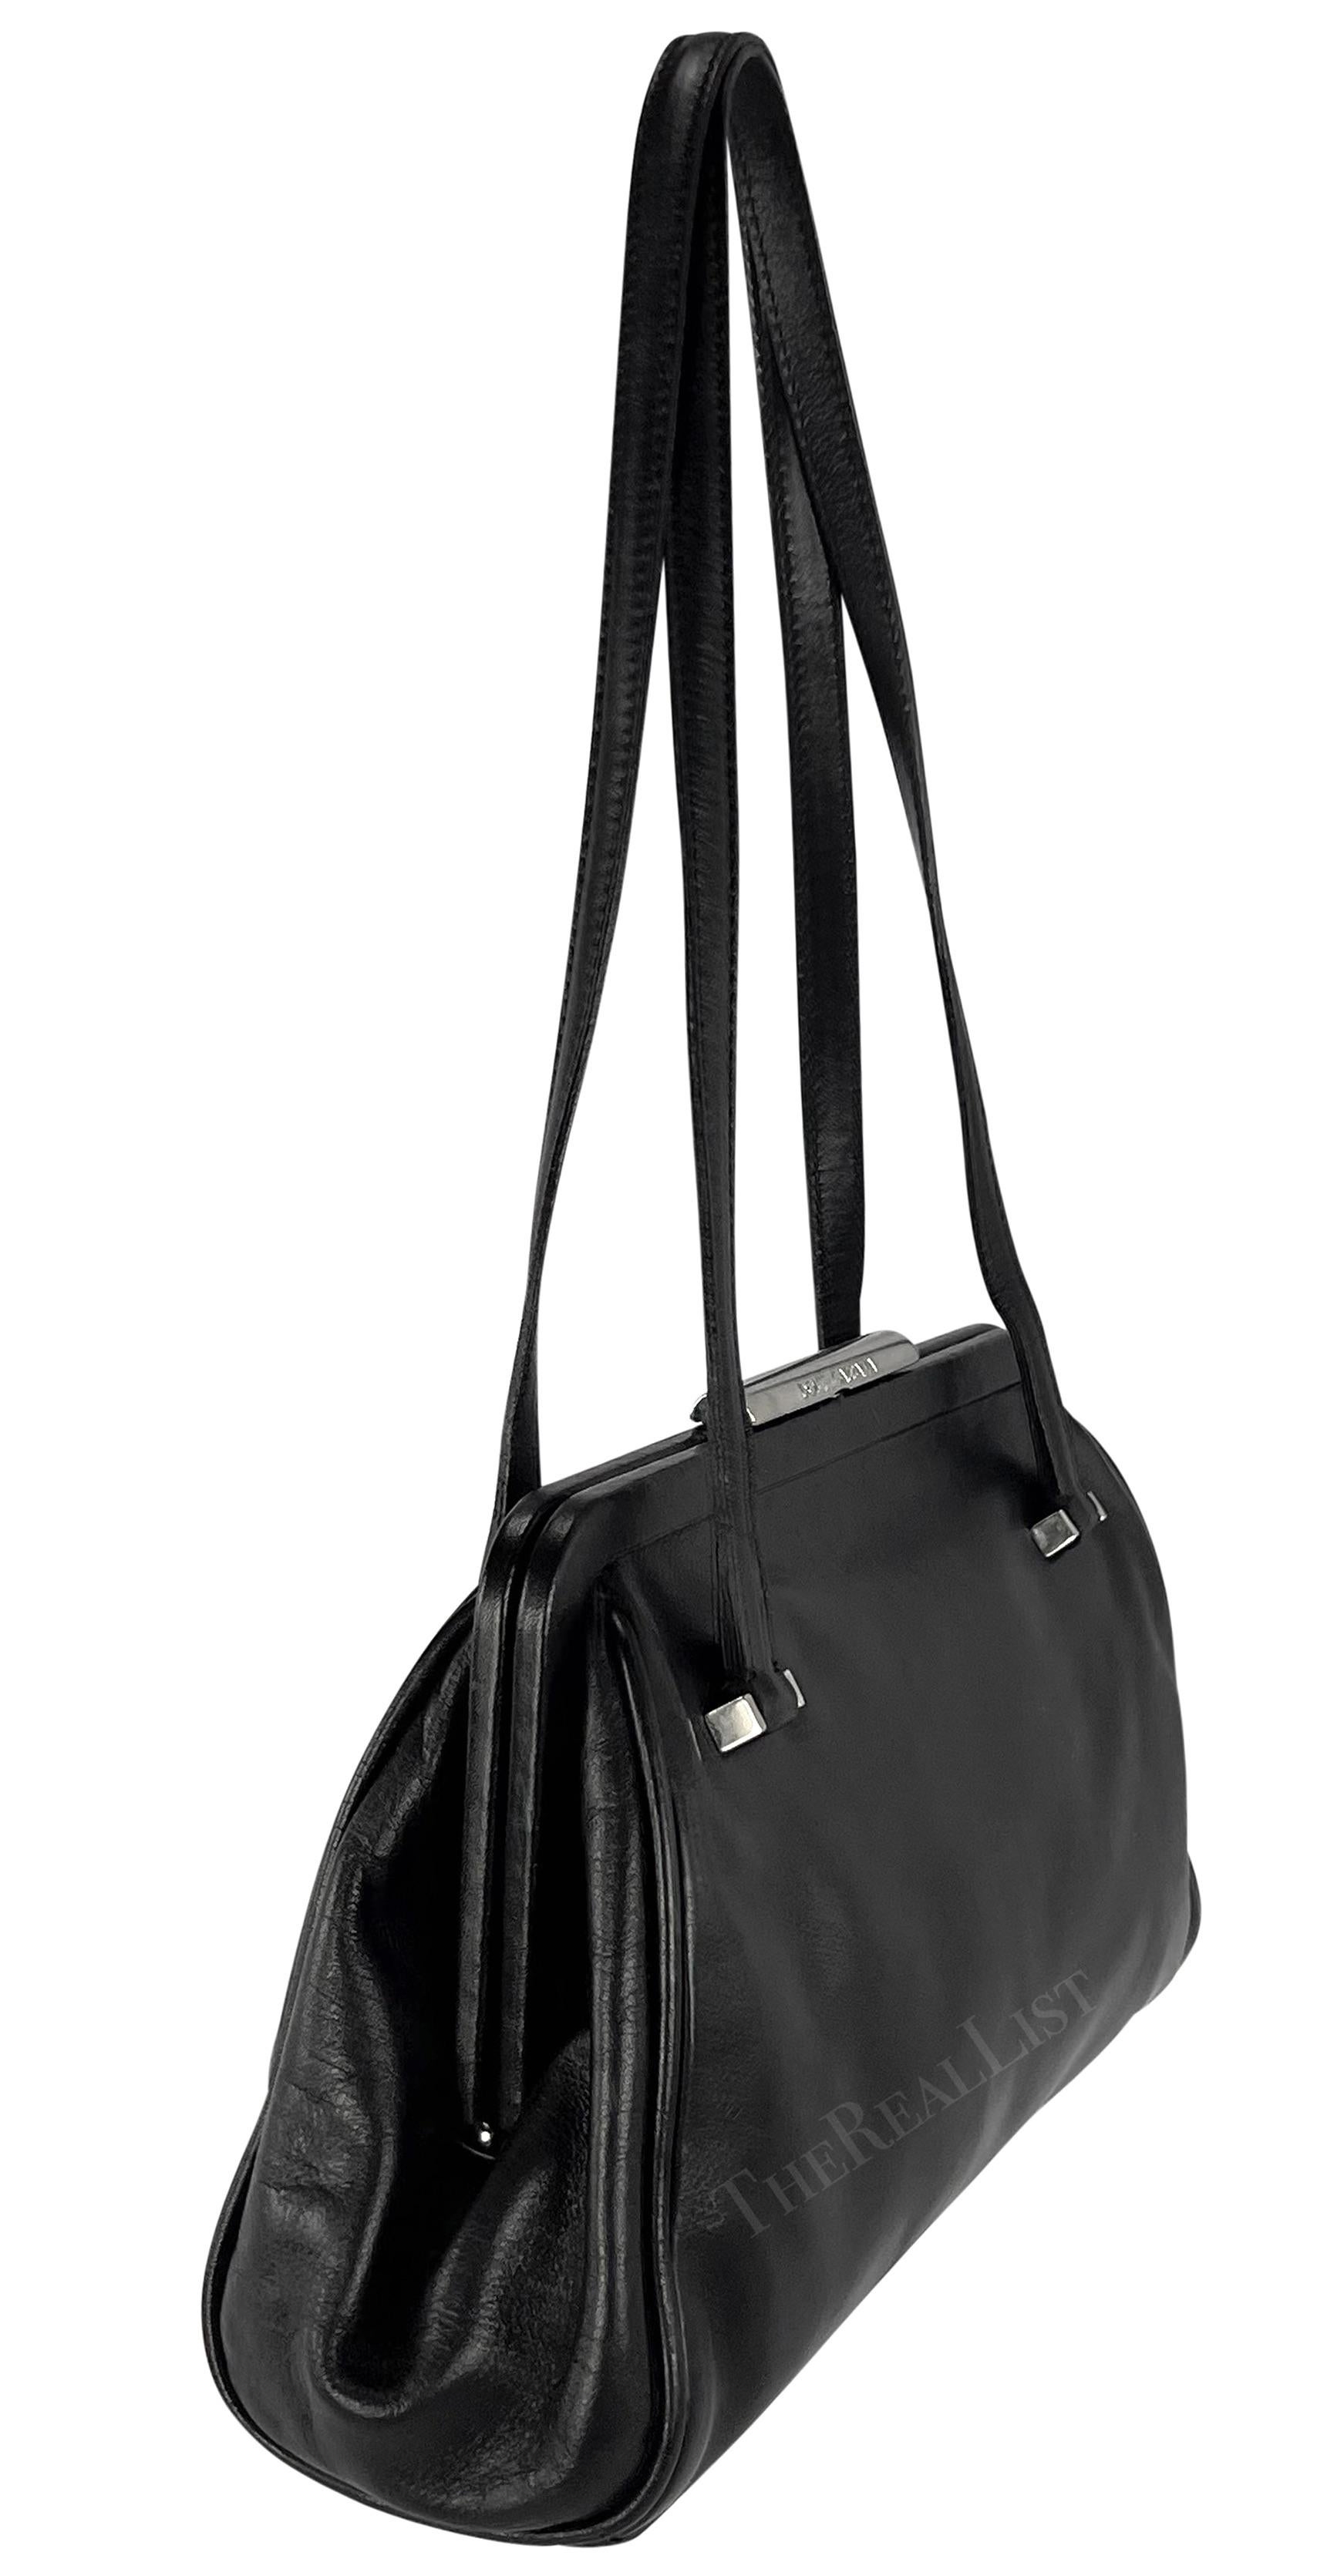 S/S 2003 Dolce & Gabbana 'Sex & Love' Black Leather Mini Shoulder Bag For Sale 4